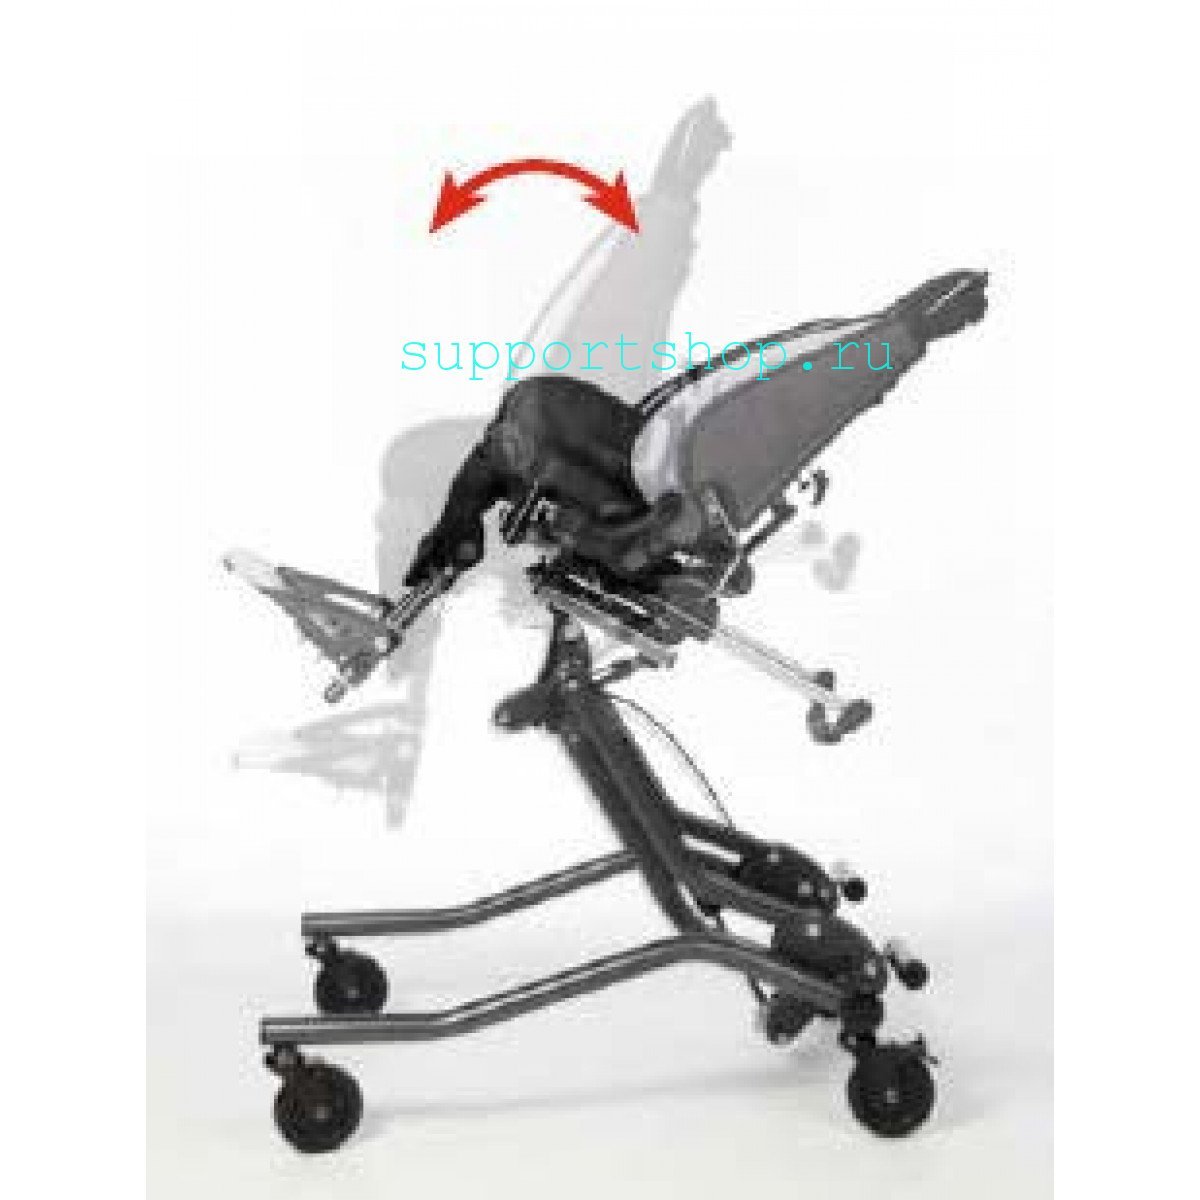 Детская коляска Thomashilfen EASyS Advantage на комнатной раме Q